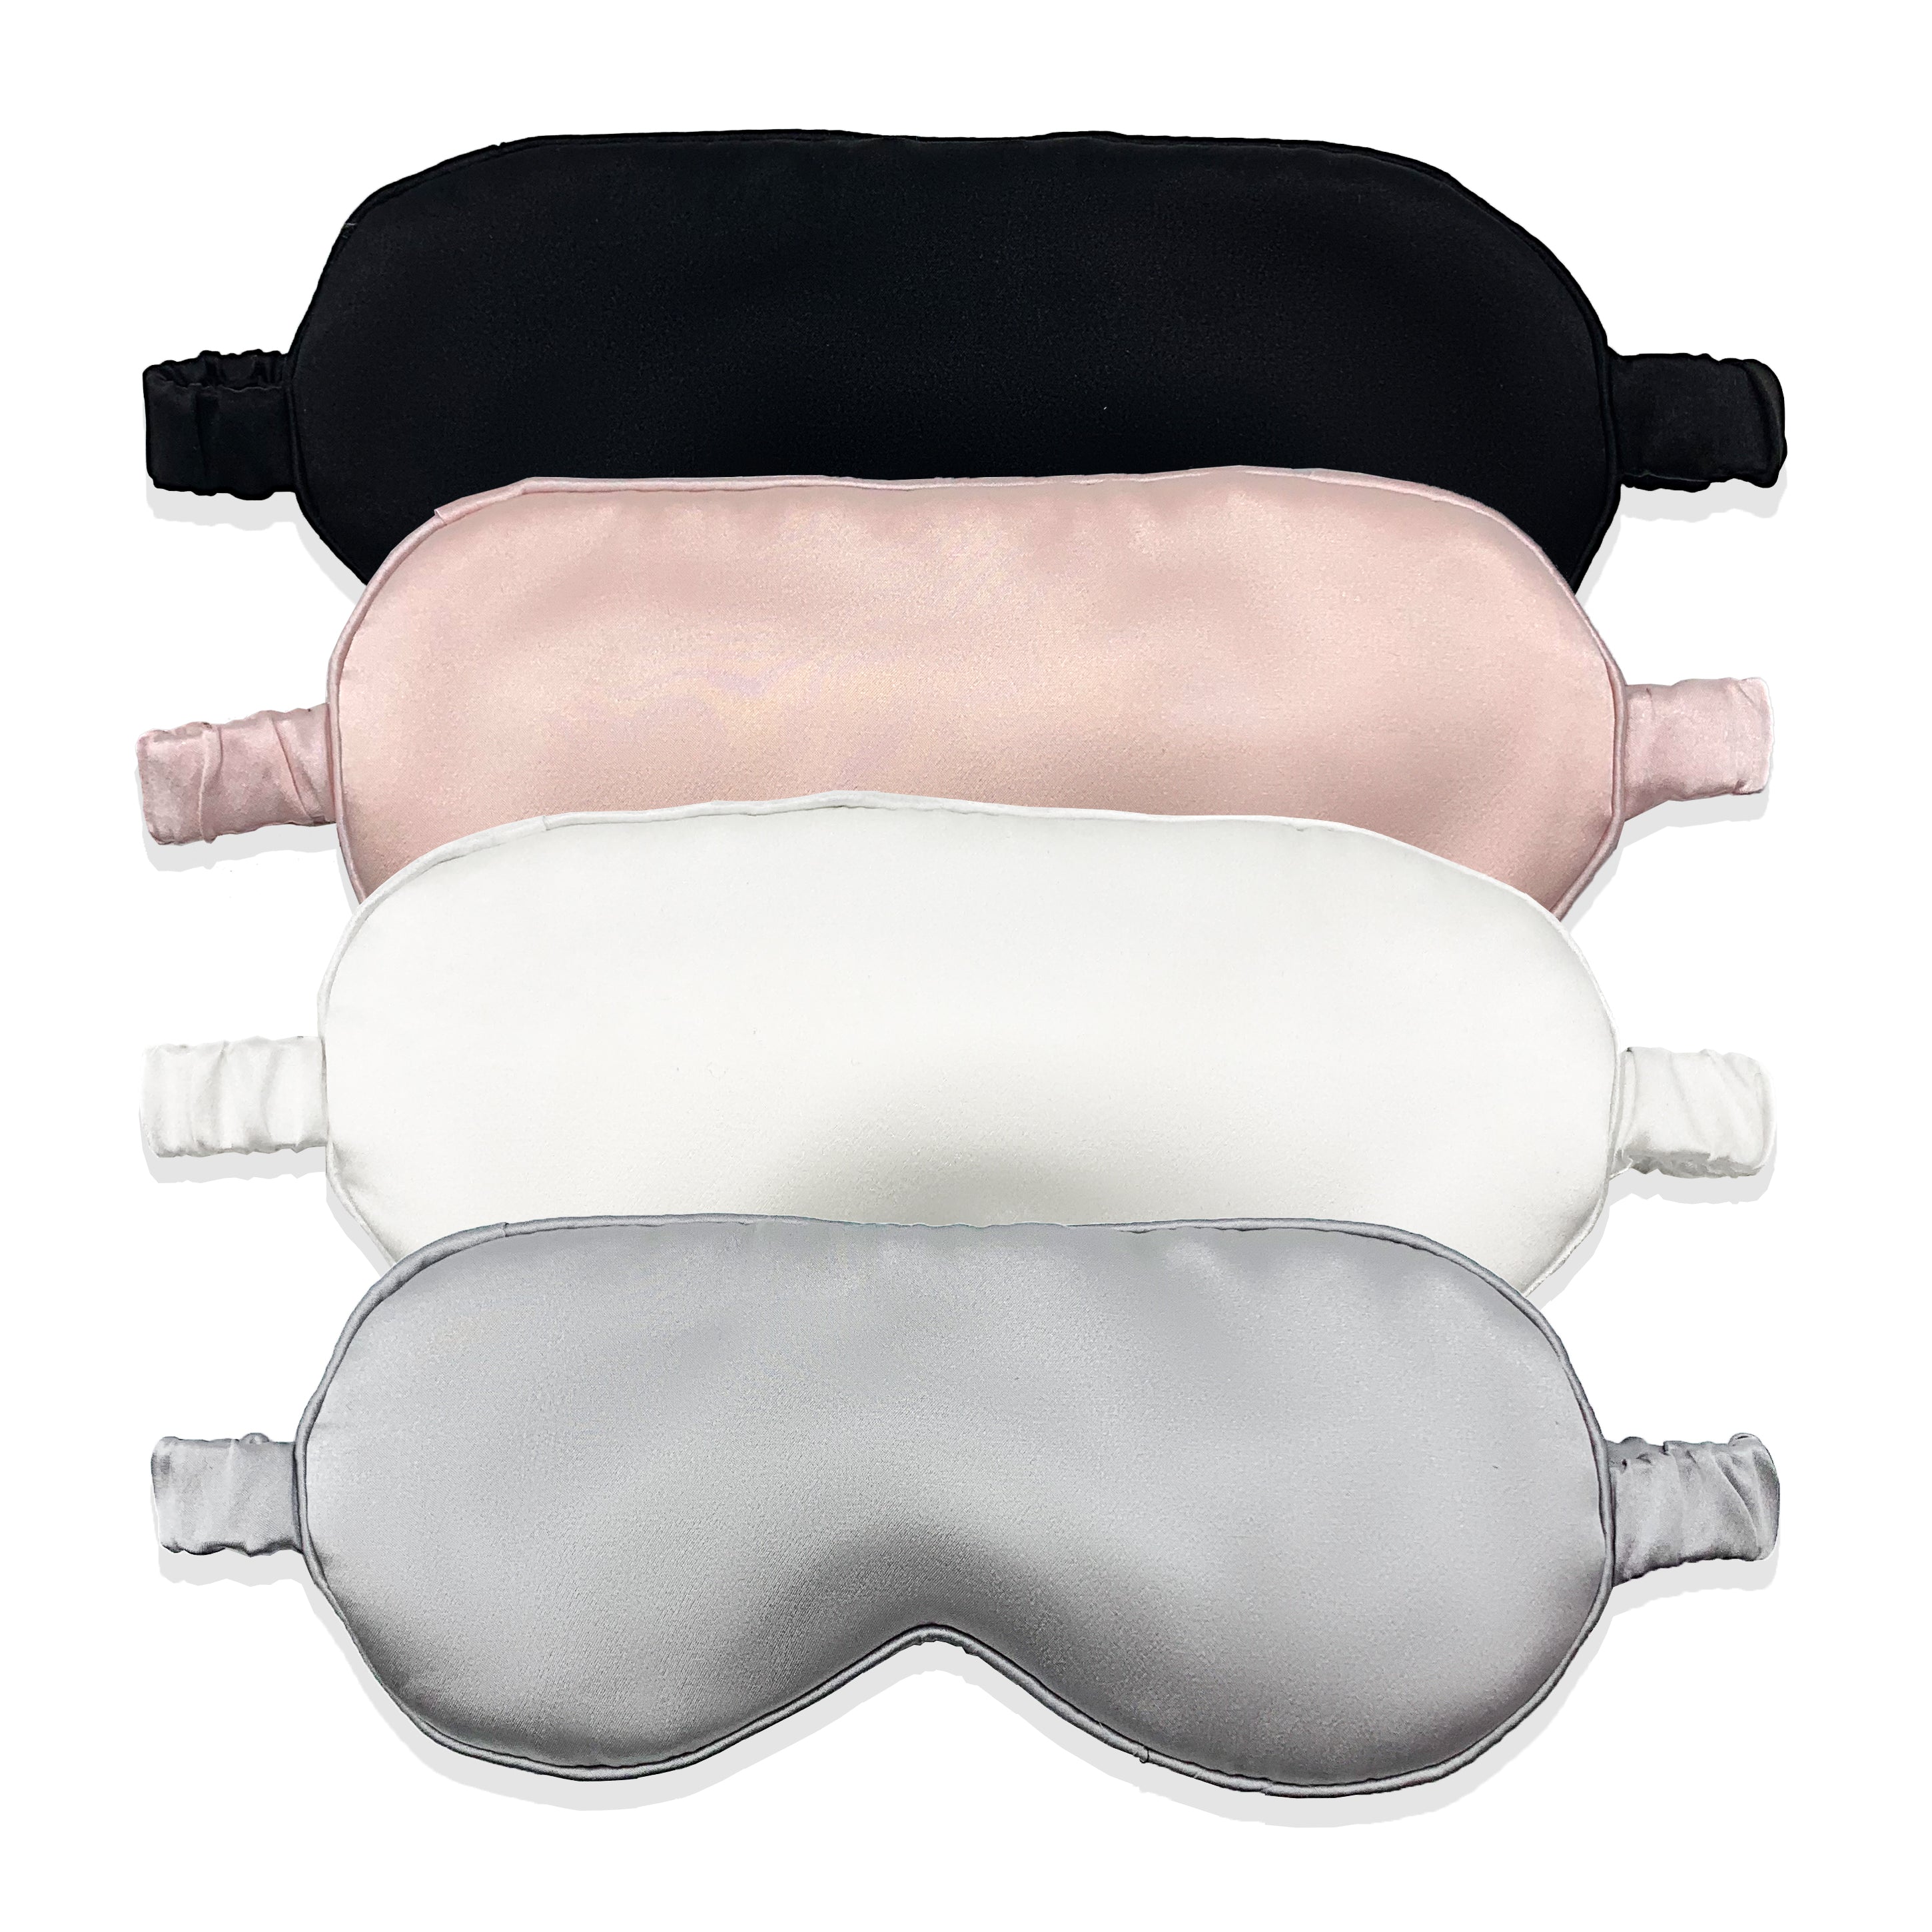 Mulberry Silk Sleep Eye Mask with Silk Covered Elastic Strap 